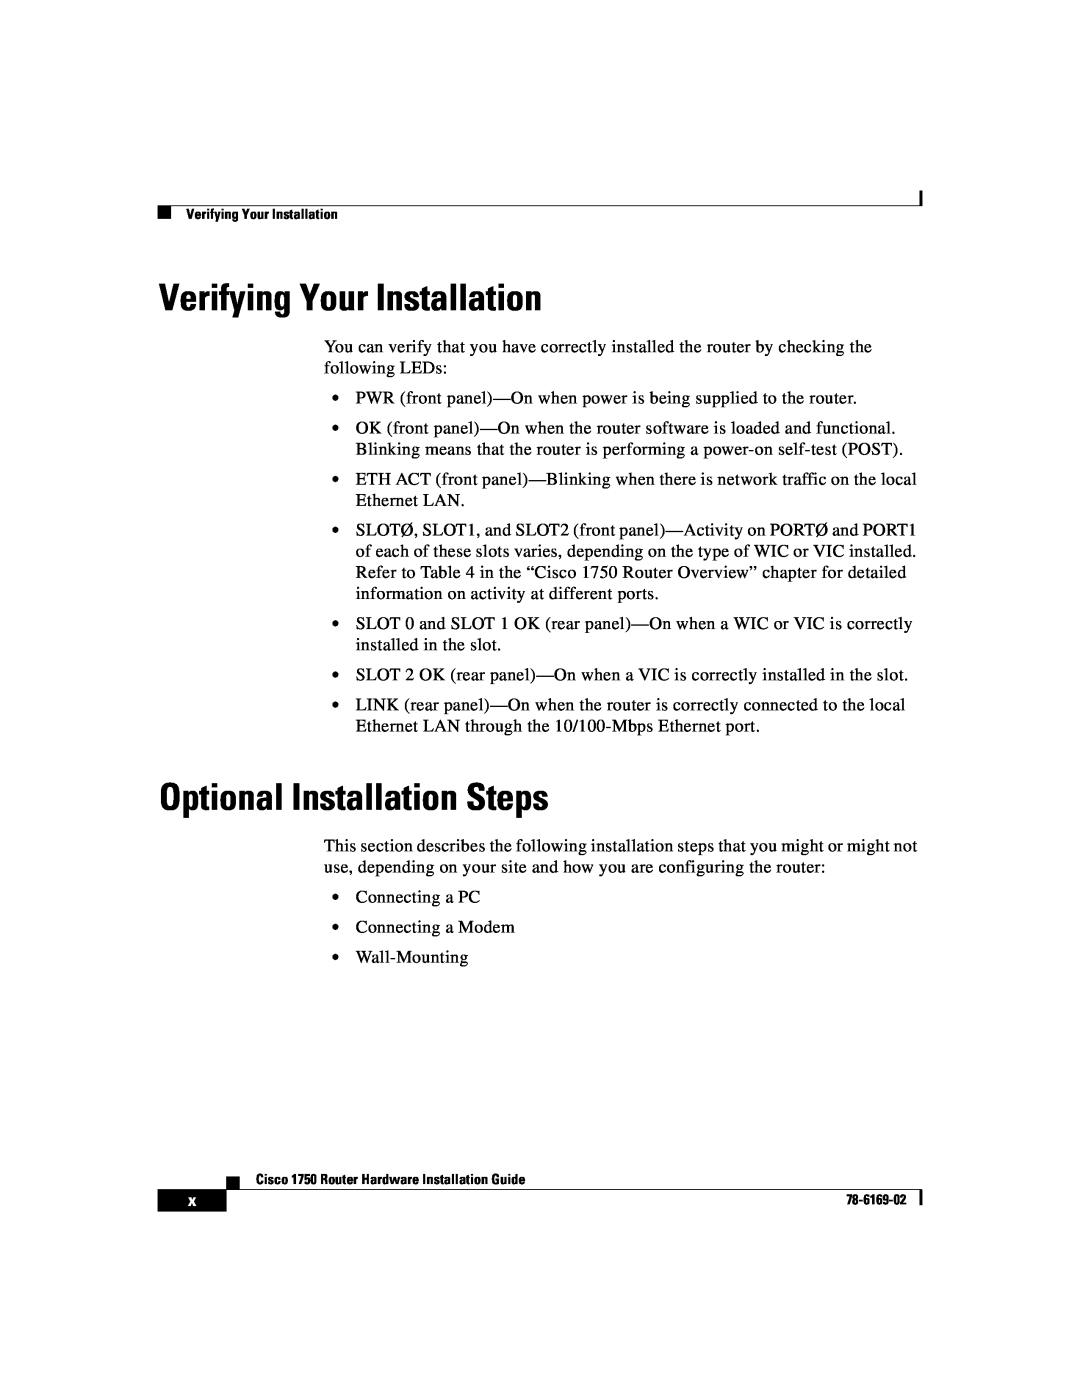 Cisco Systems CISCO1750 manual Verifying Your Installation, Optional Installation Steps 